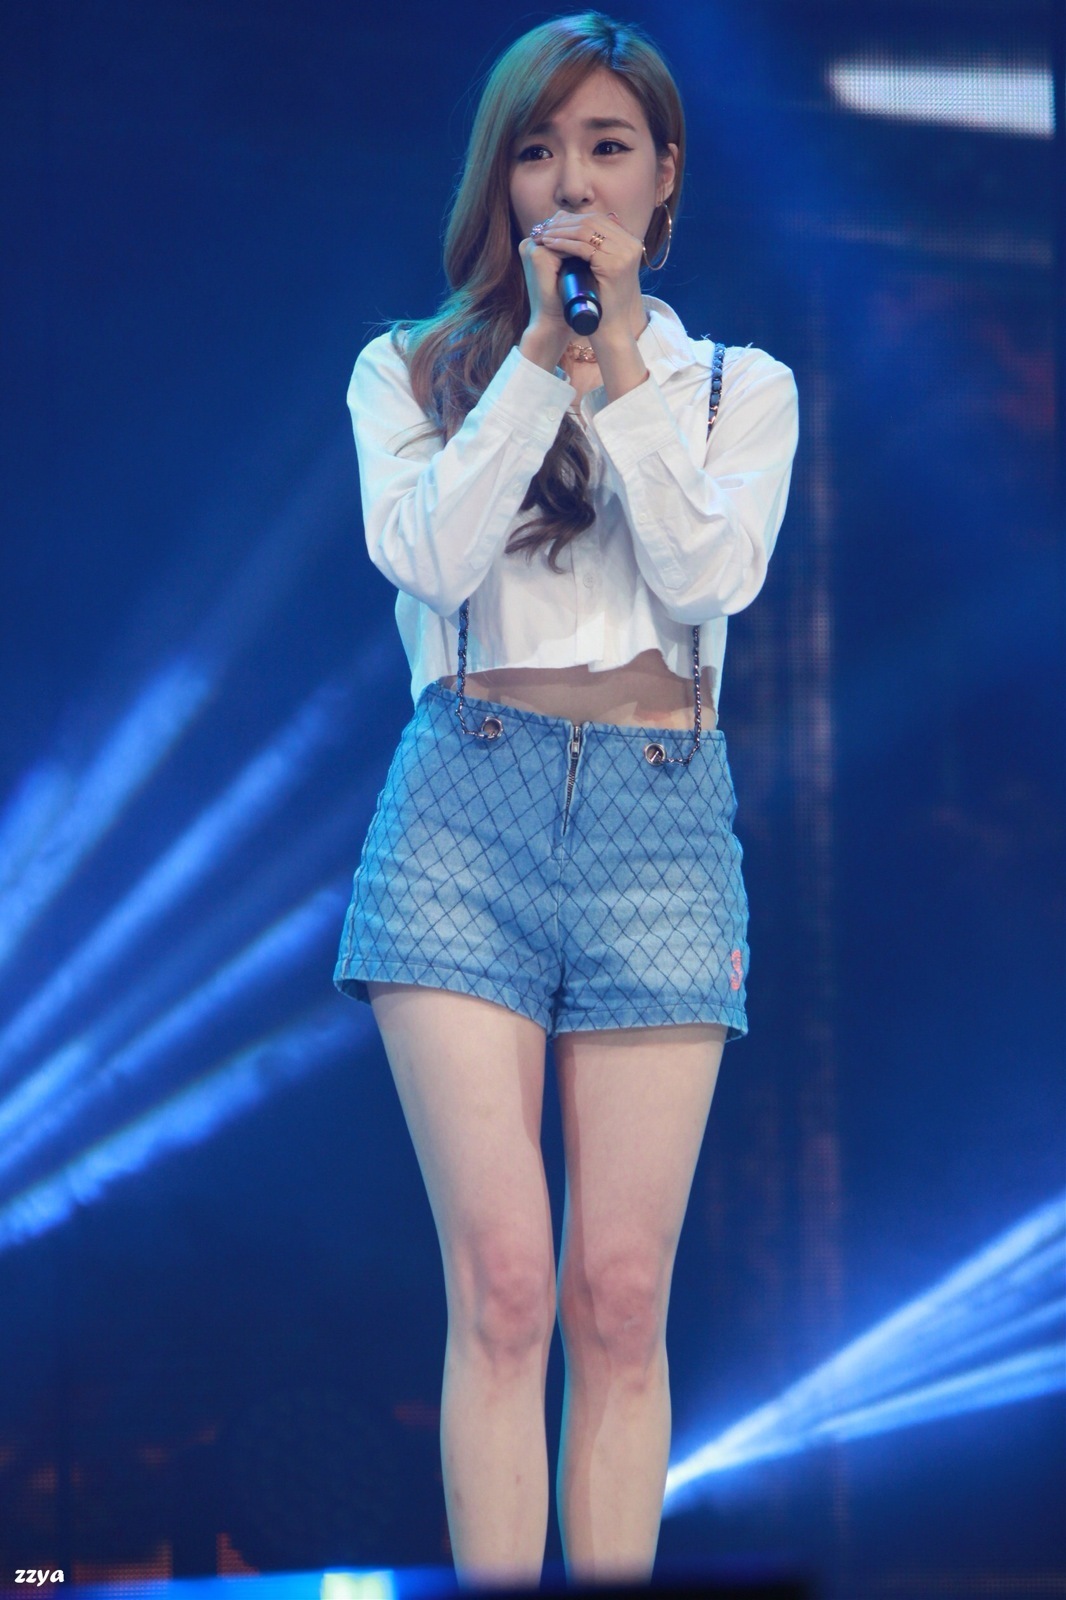 [PIC][07-10-2014]TaeTiSeo biểu diễn tại "WAPOP CONCERT" vào tối nay 710aff8bjw1el3kyctdbhj20tm18gwm9